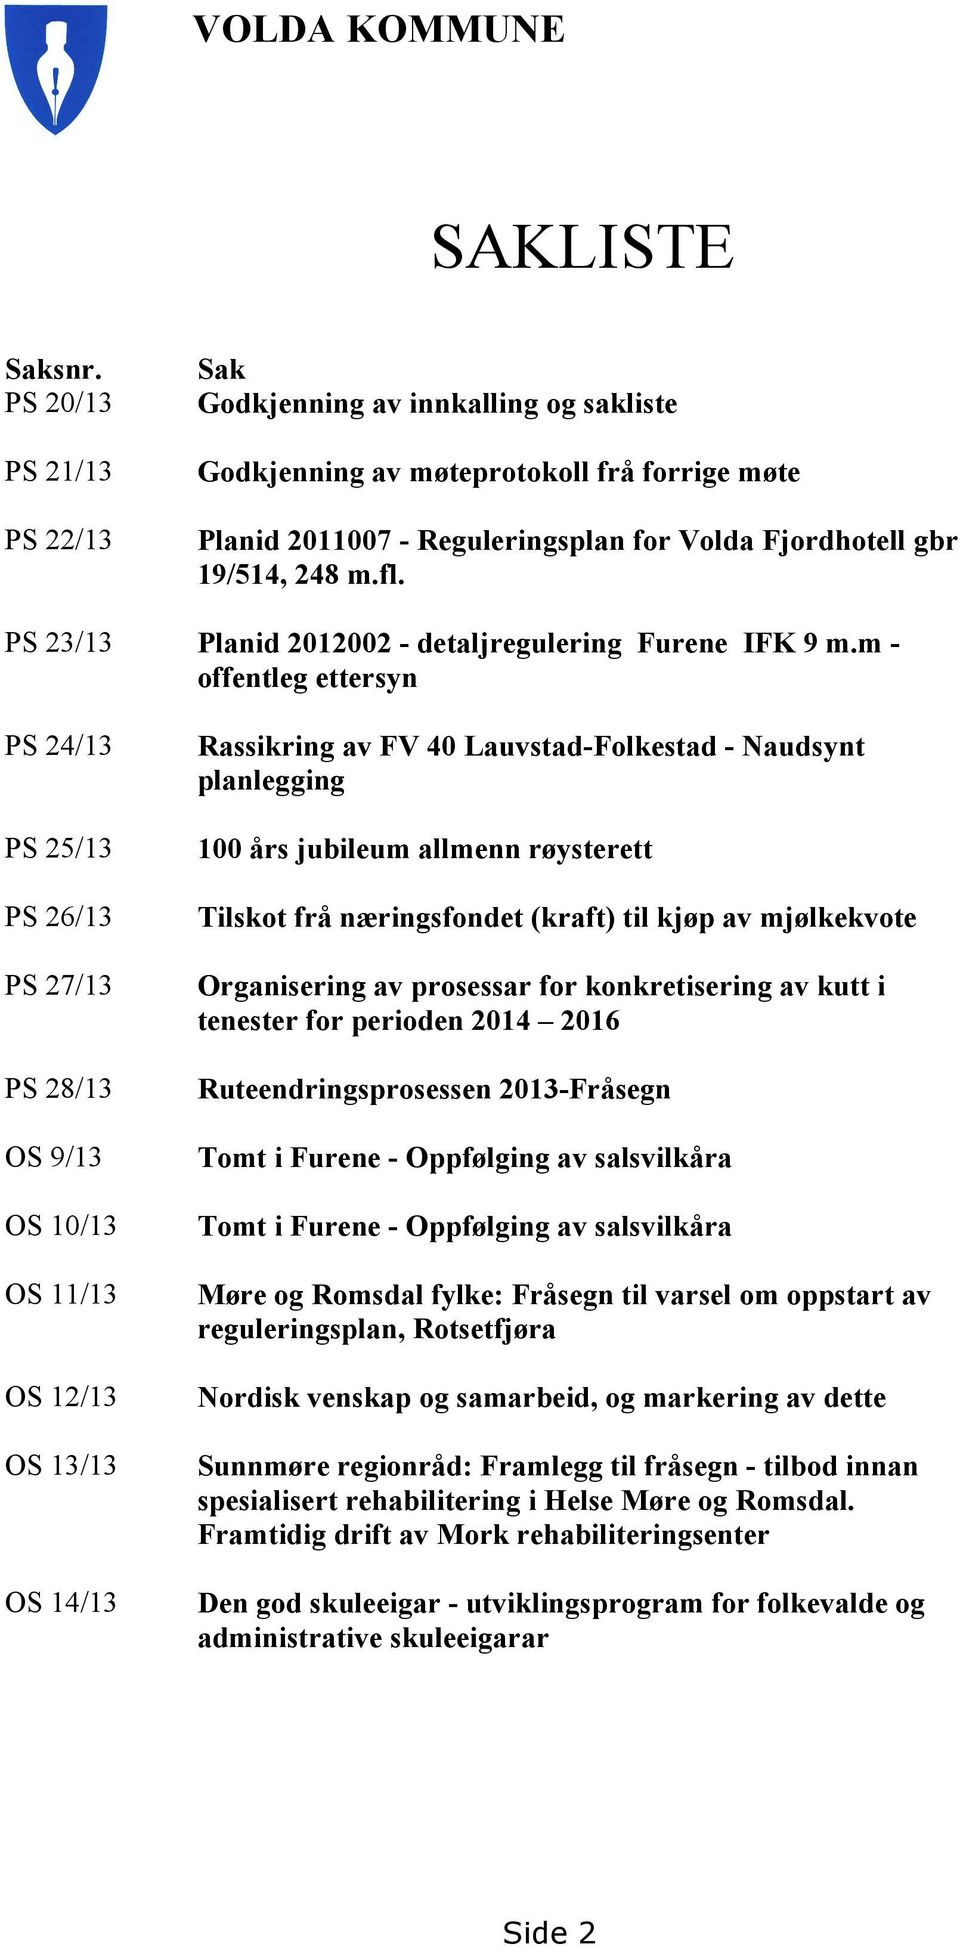 PS 23/13 Planid 2012002 - detaljregulering Furene IFK 9 m.